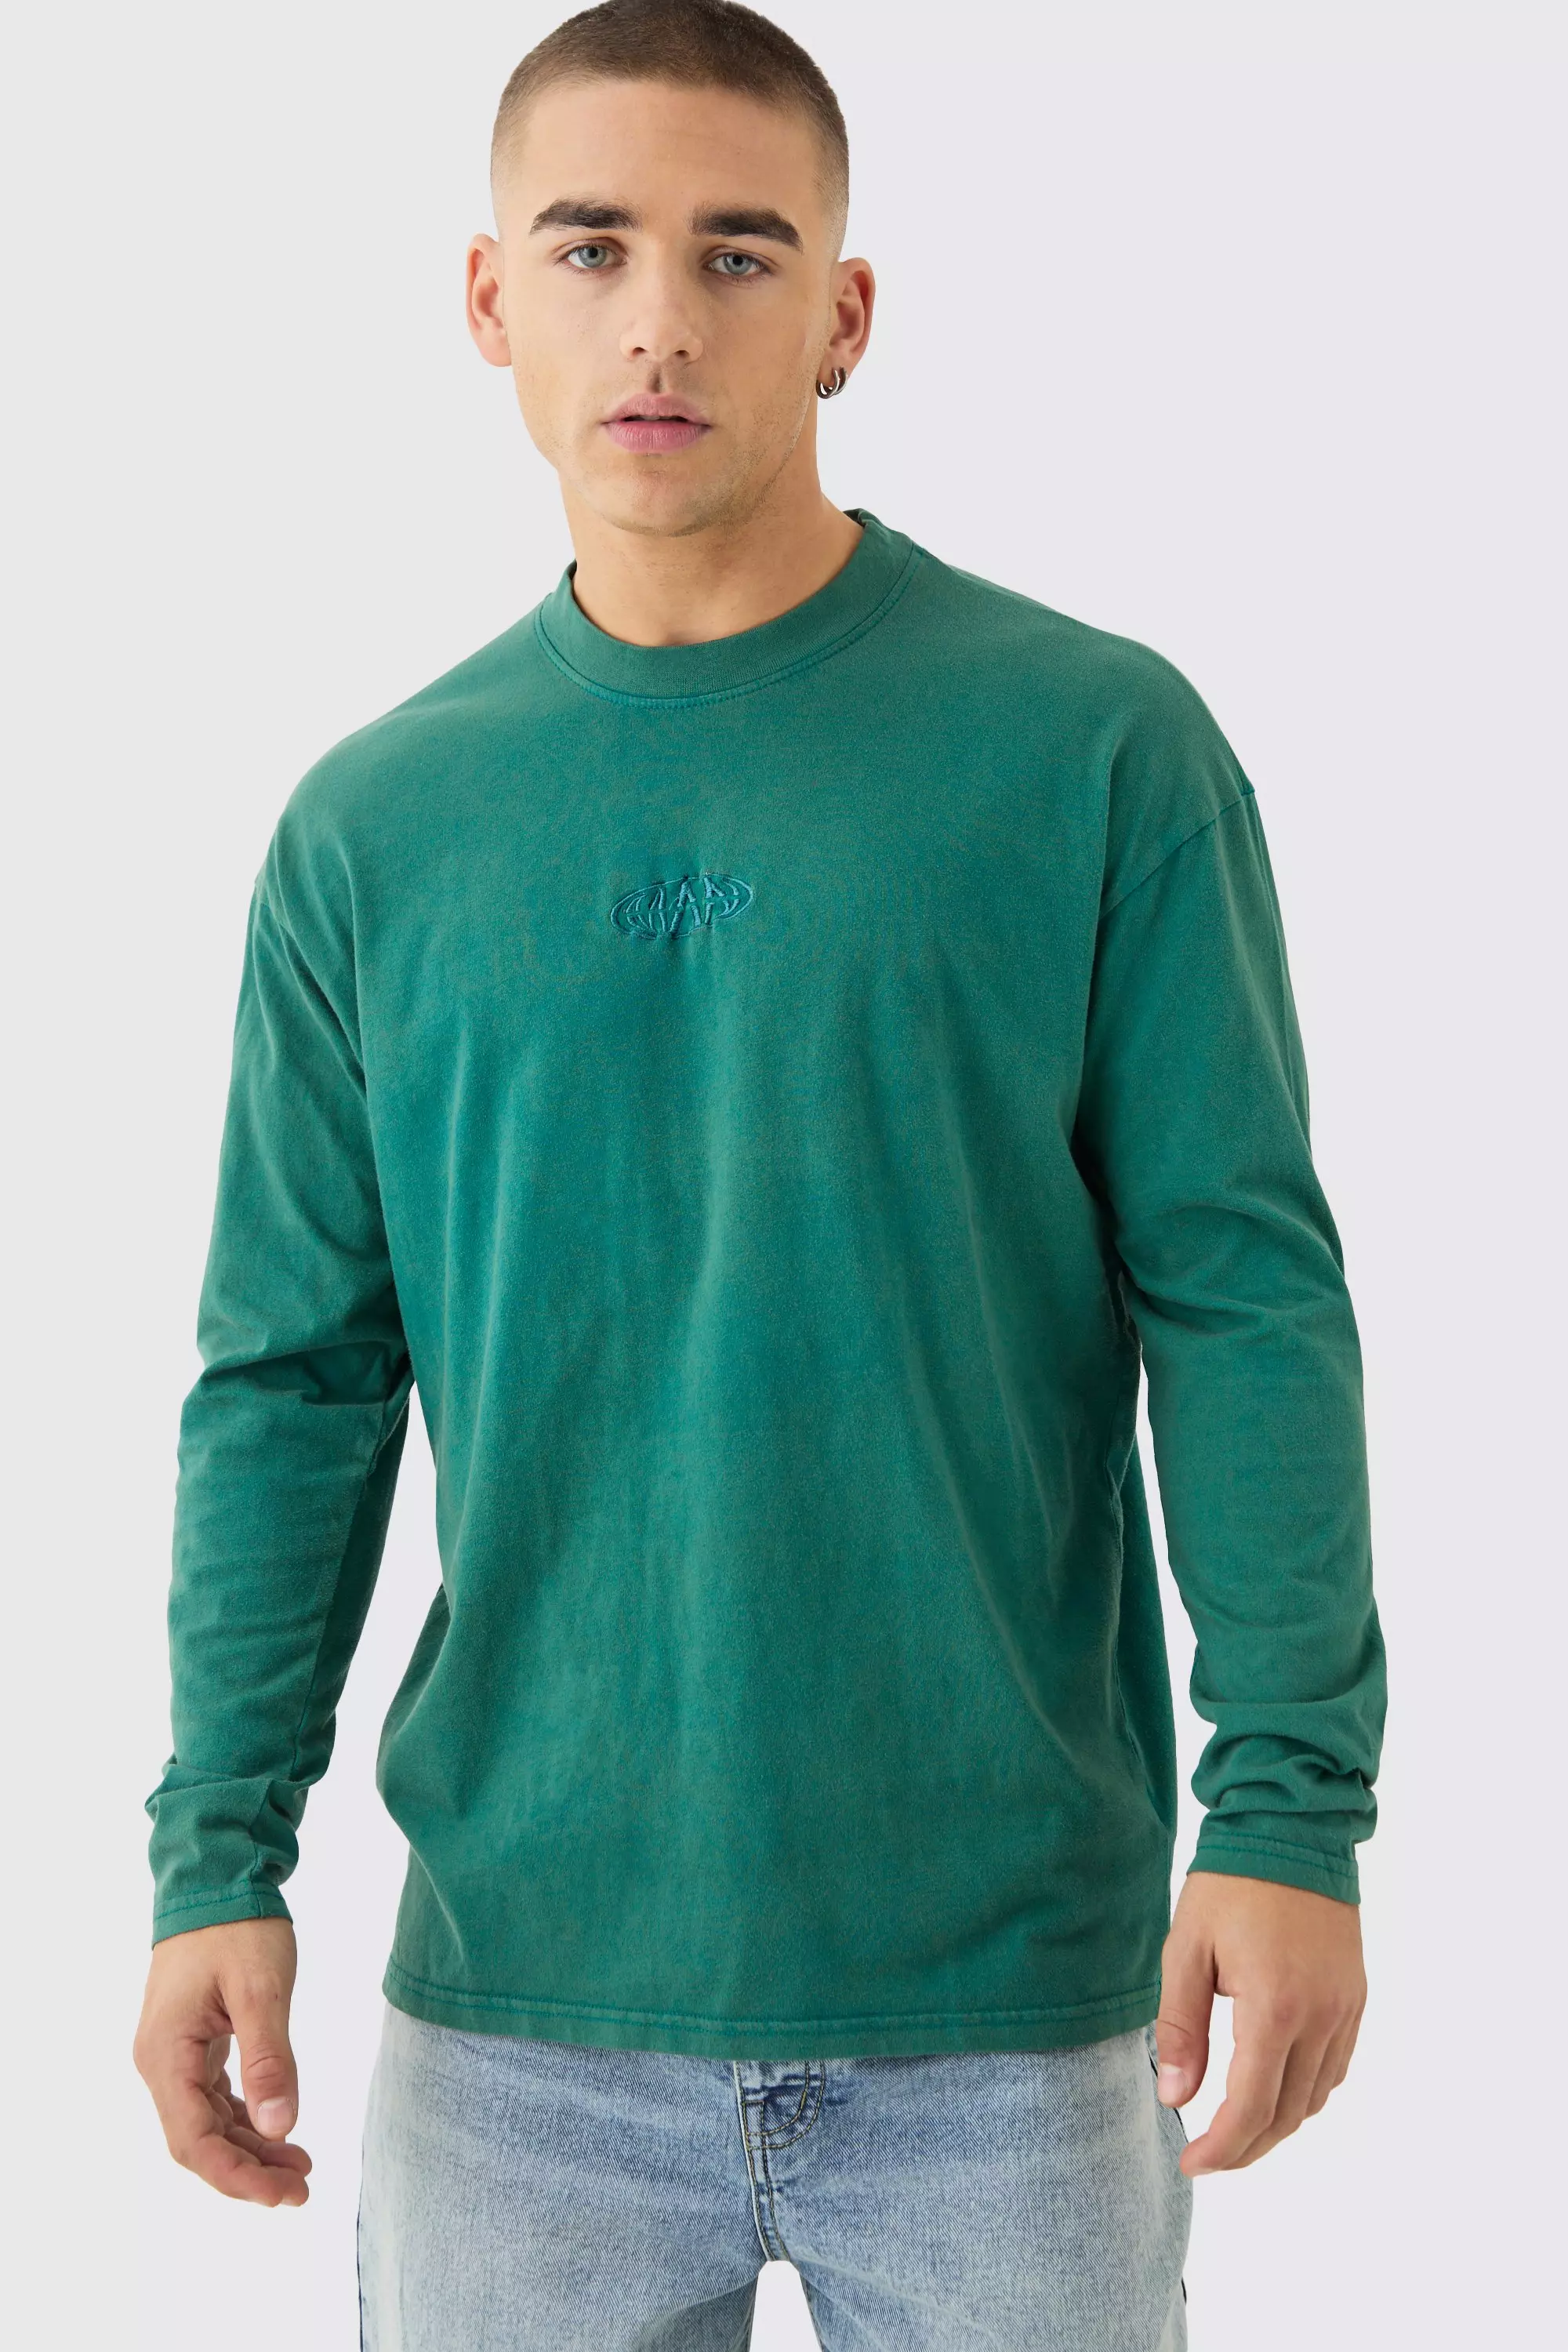 Teal Green Oversized Man Extended Neck Acid Wash Long Sleeve T-shirt